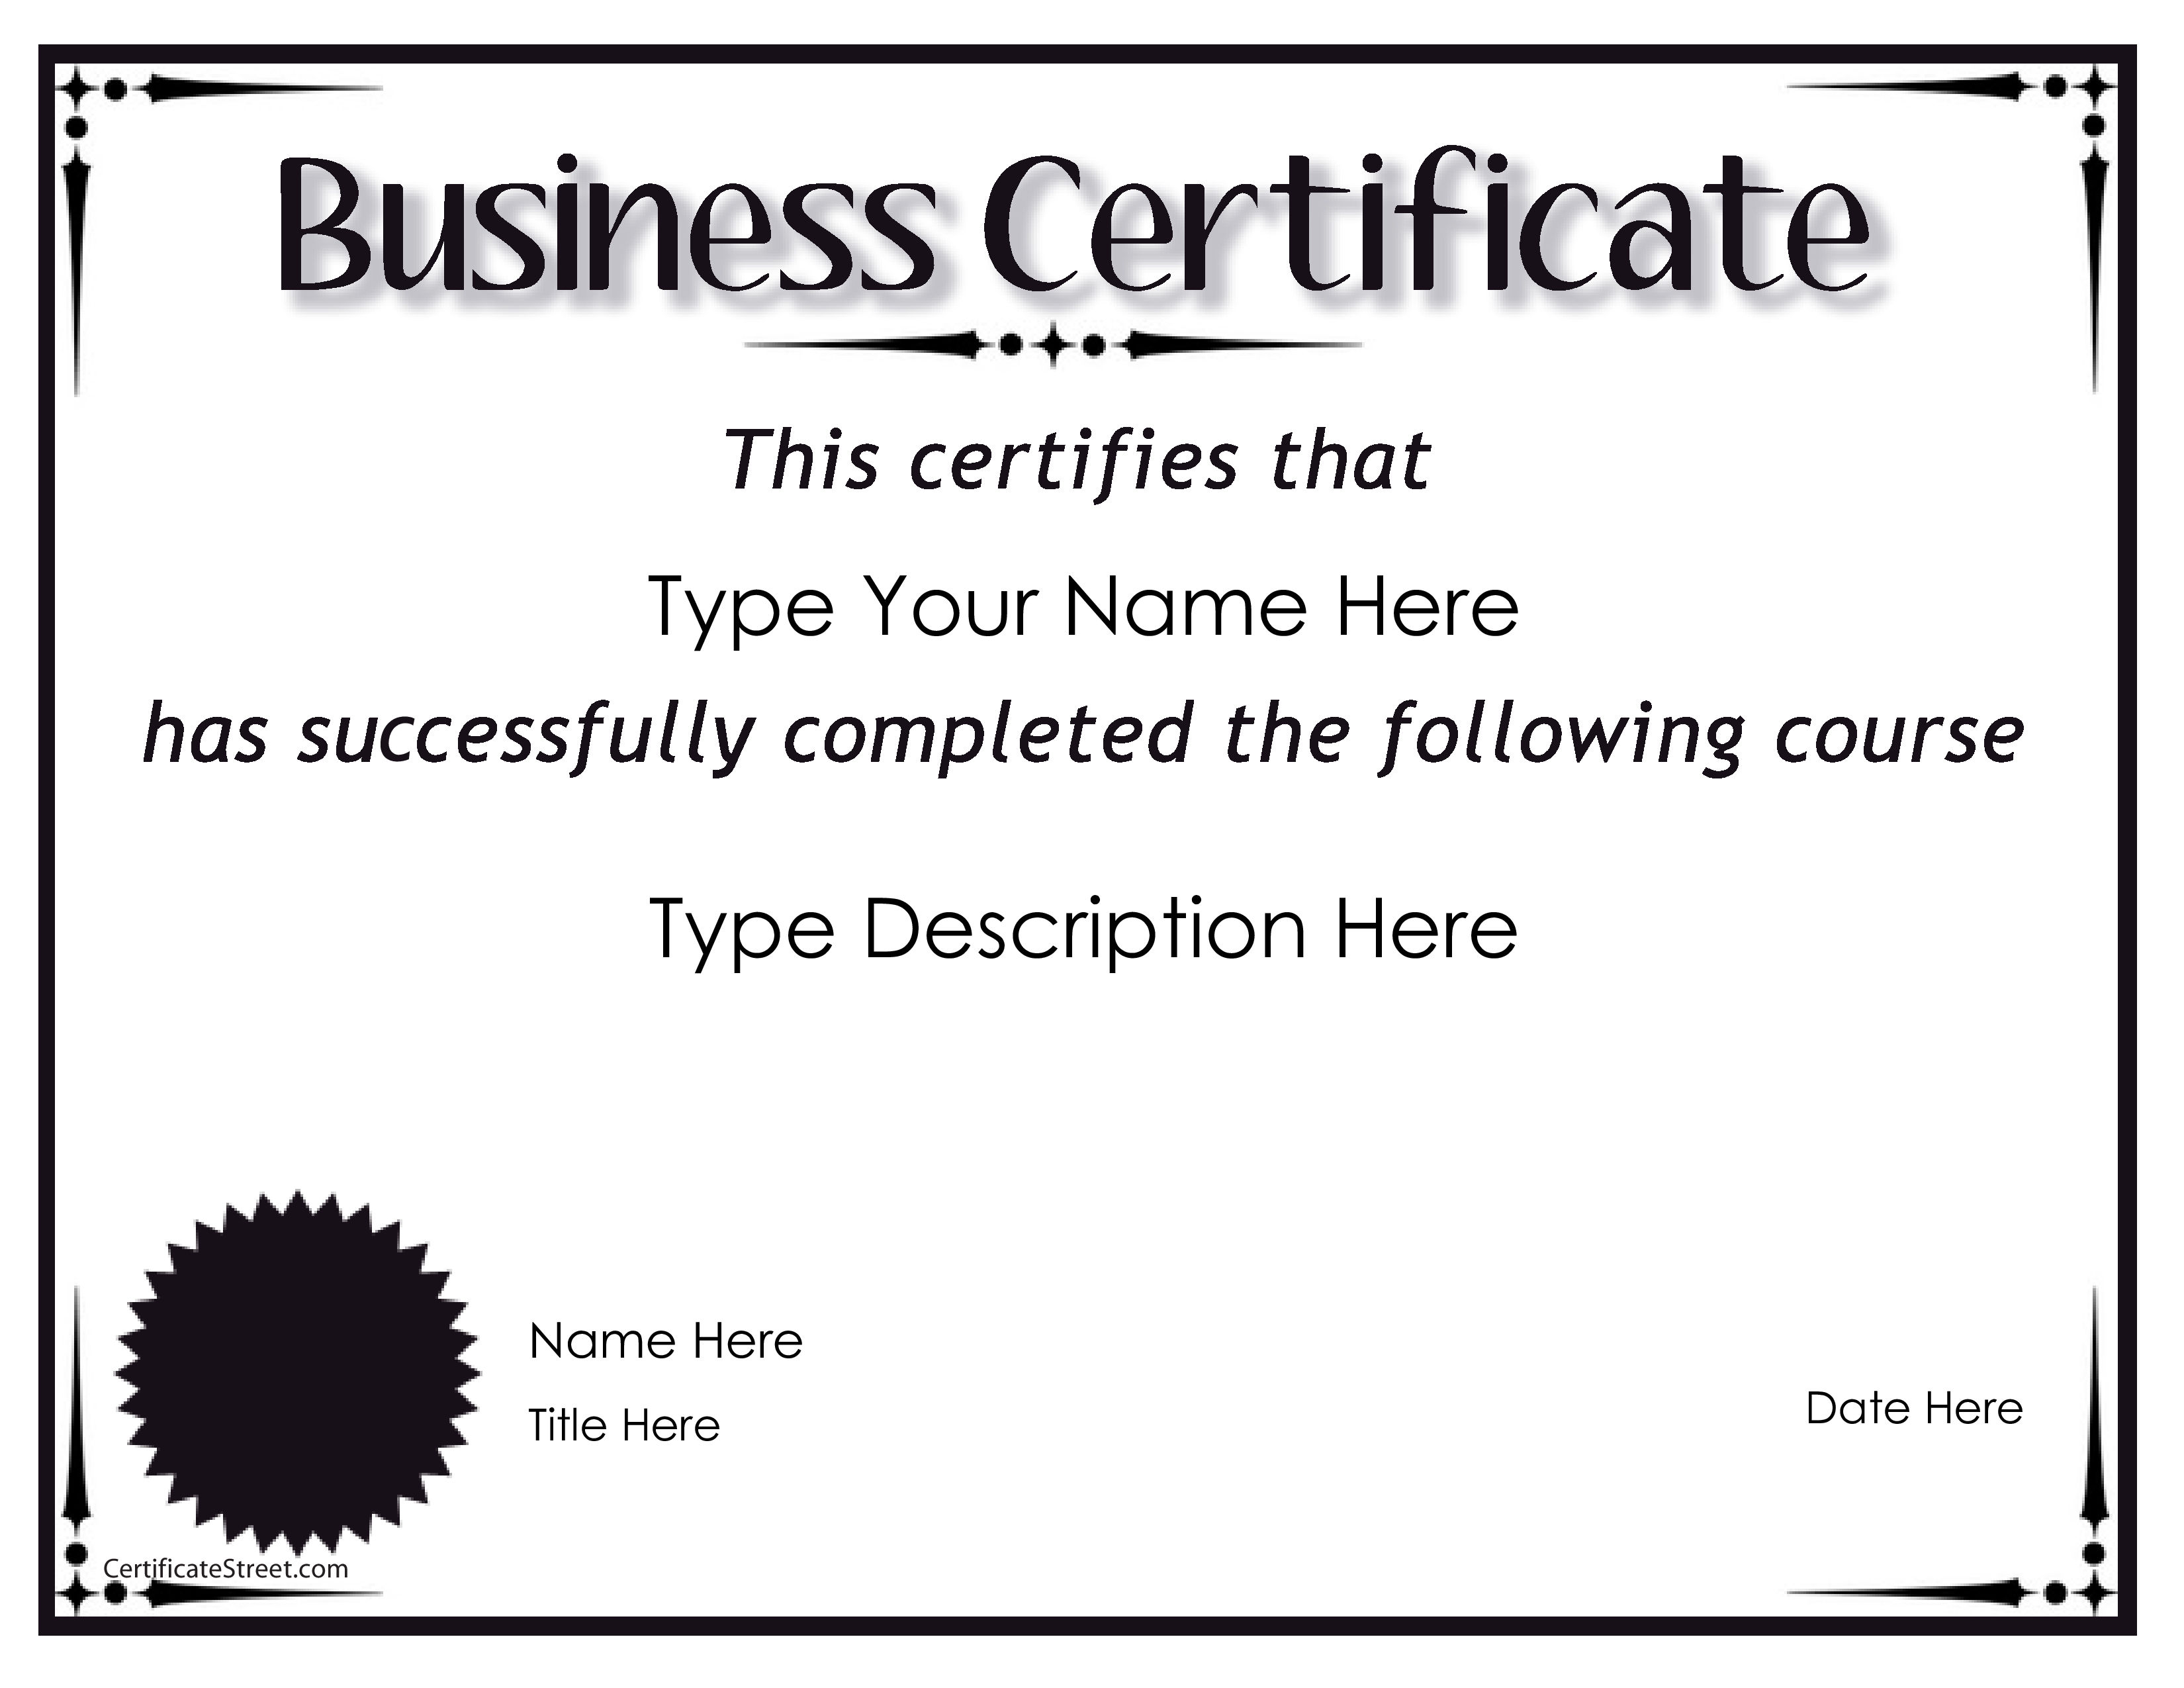 Business Certificate 模板